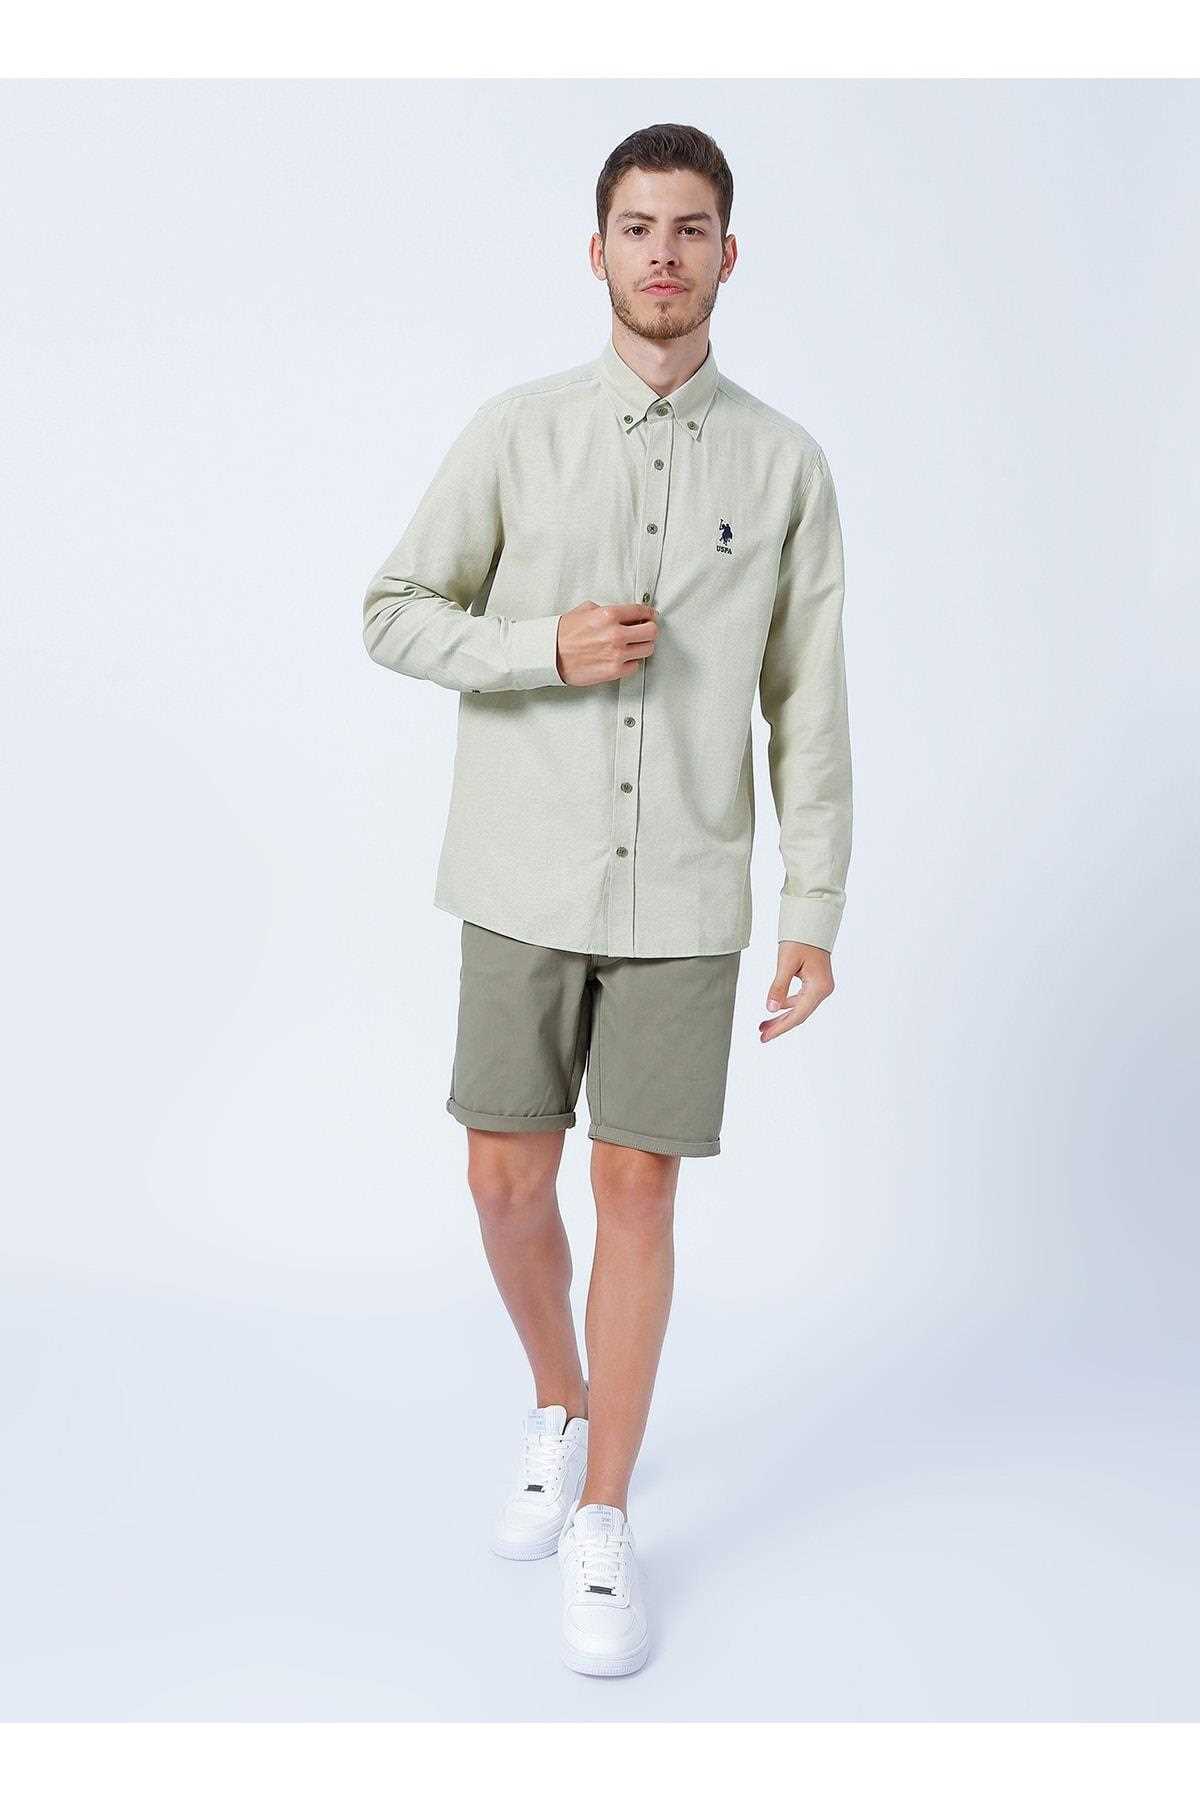 خرید پیراهن مردانه ترک شیک US Polo Assn رنگ سبز کد ty340813778